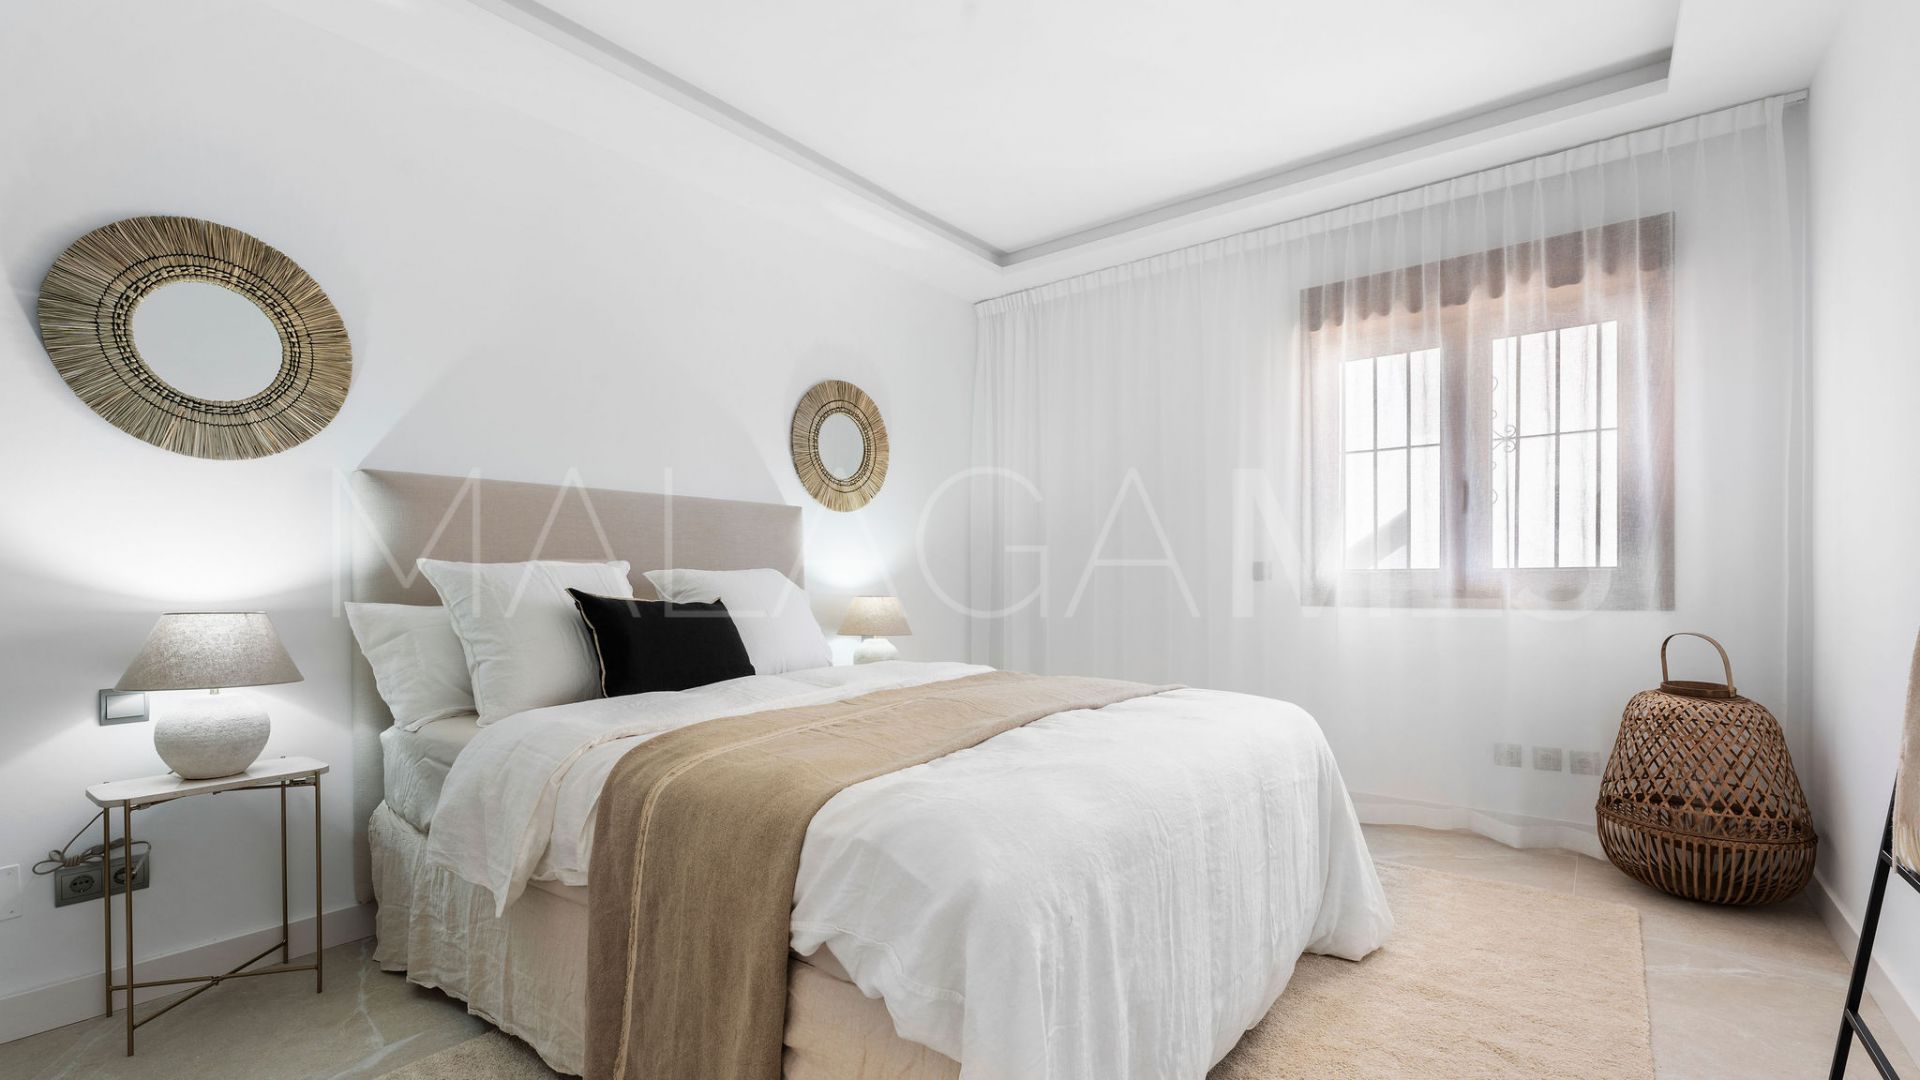 3 bedrooms Aldea Blanca ground floor apartment for sale